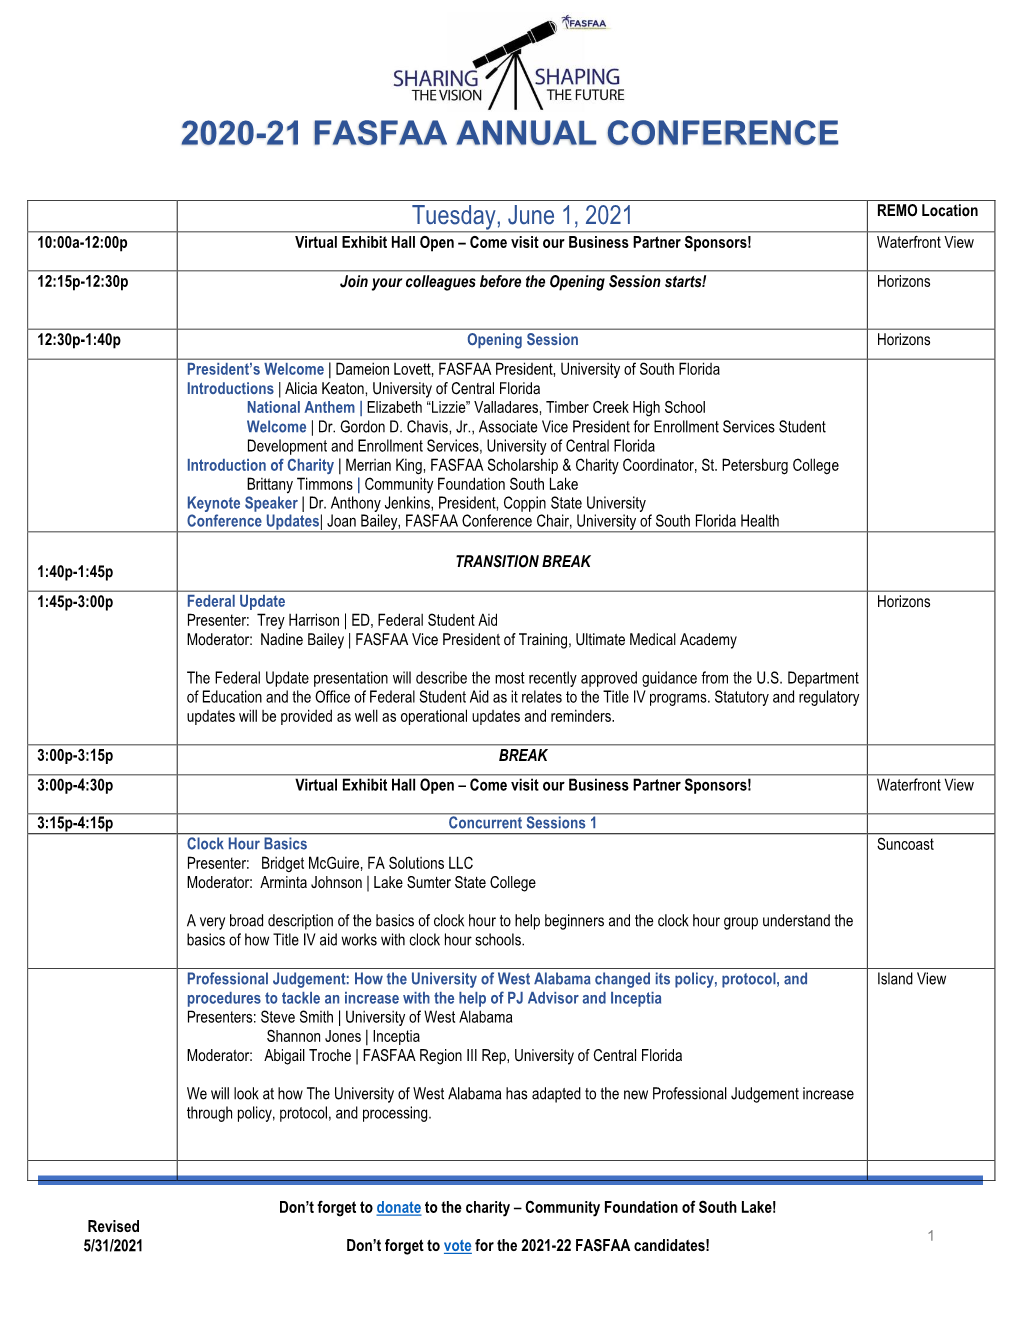 2020-21 Fasfaa Annual Conference